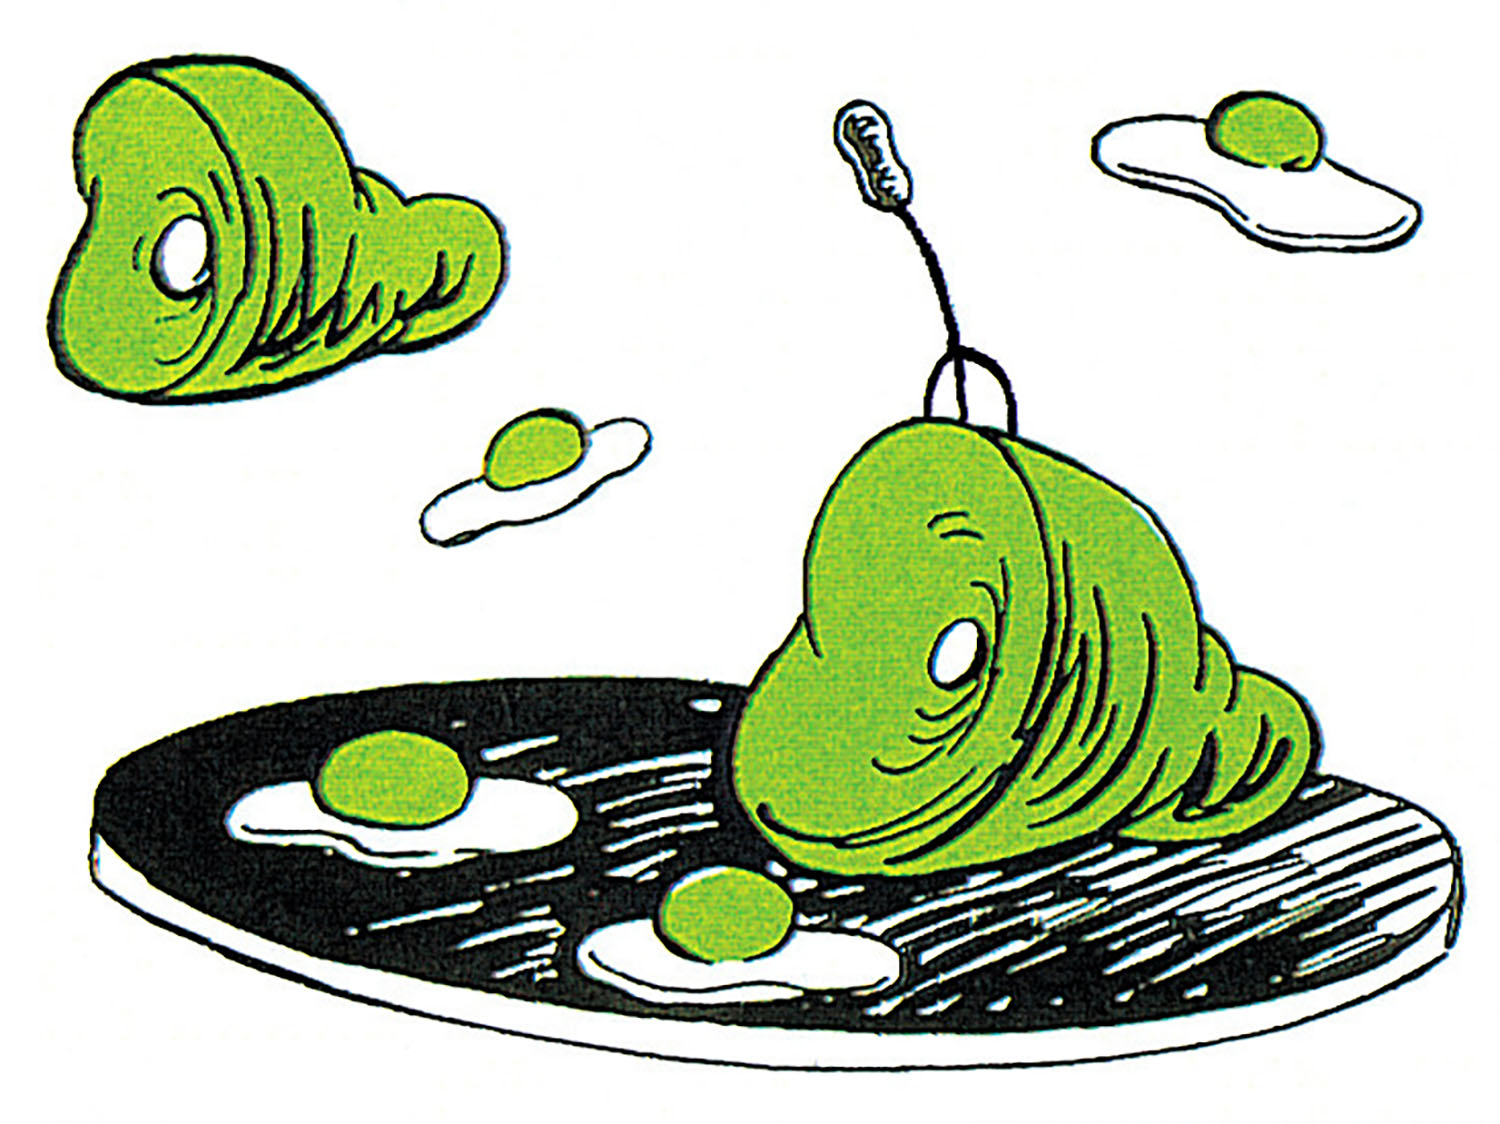 dr-seuss-green-eggs-and-ham-clip-art-20-free-cliparts-download-images